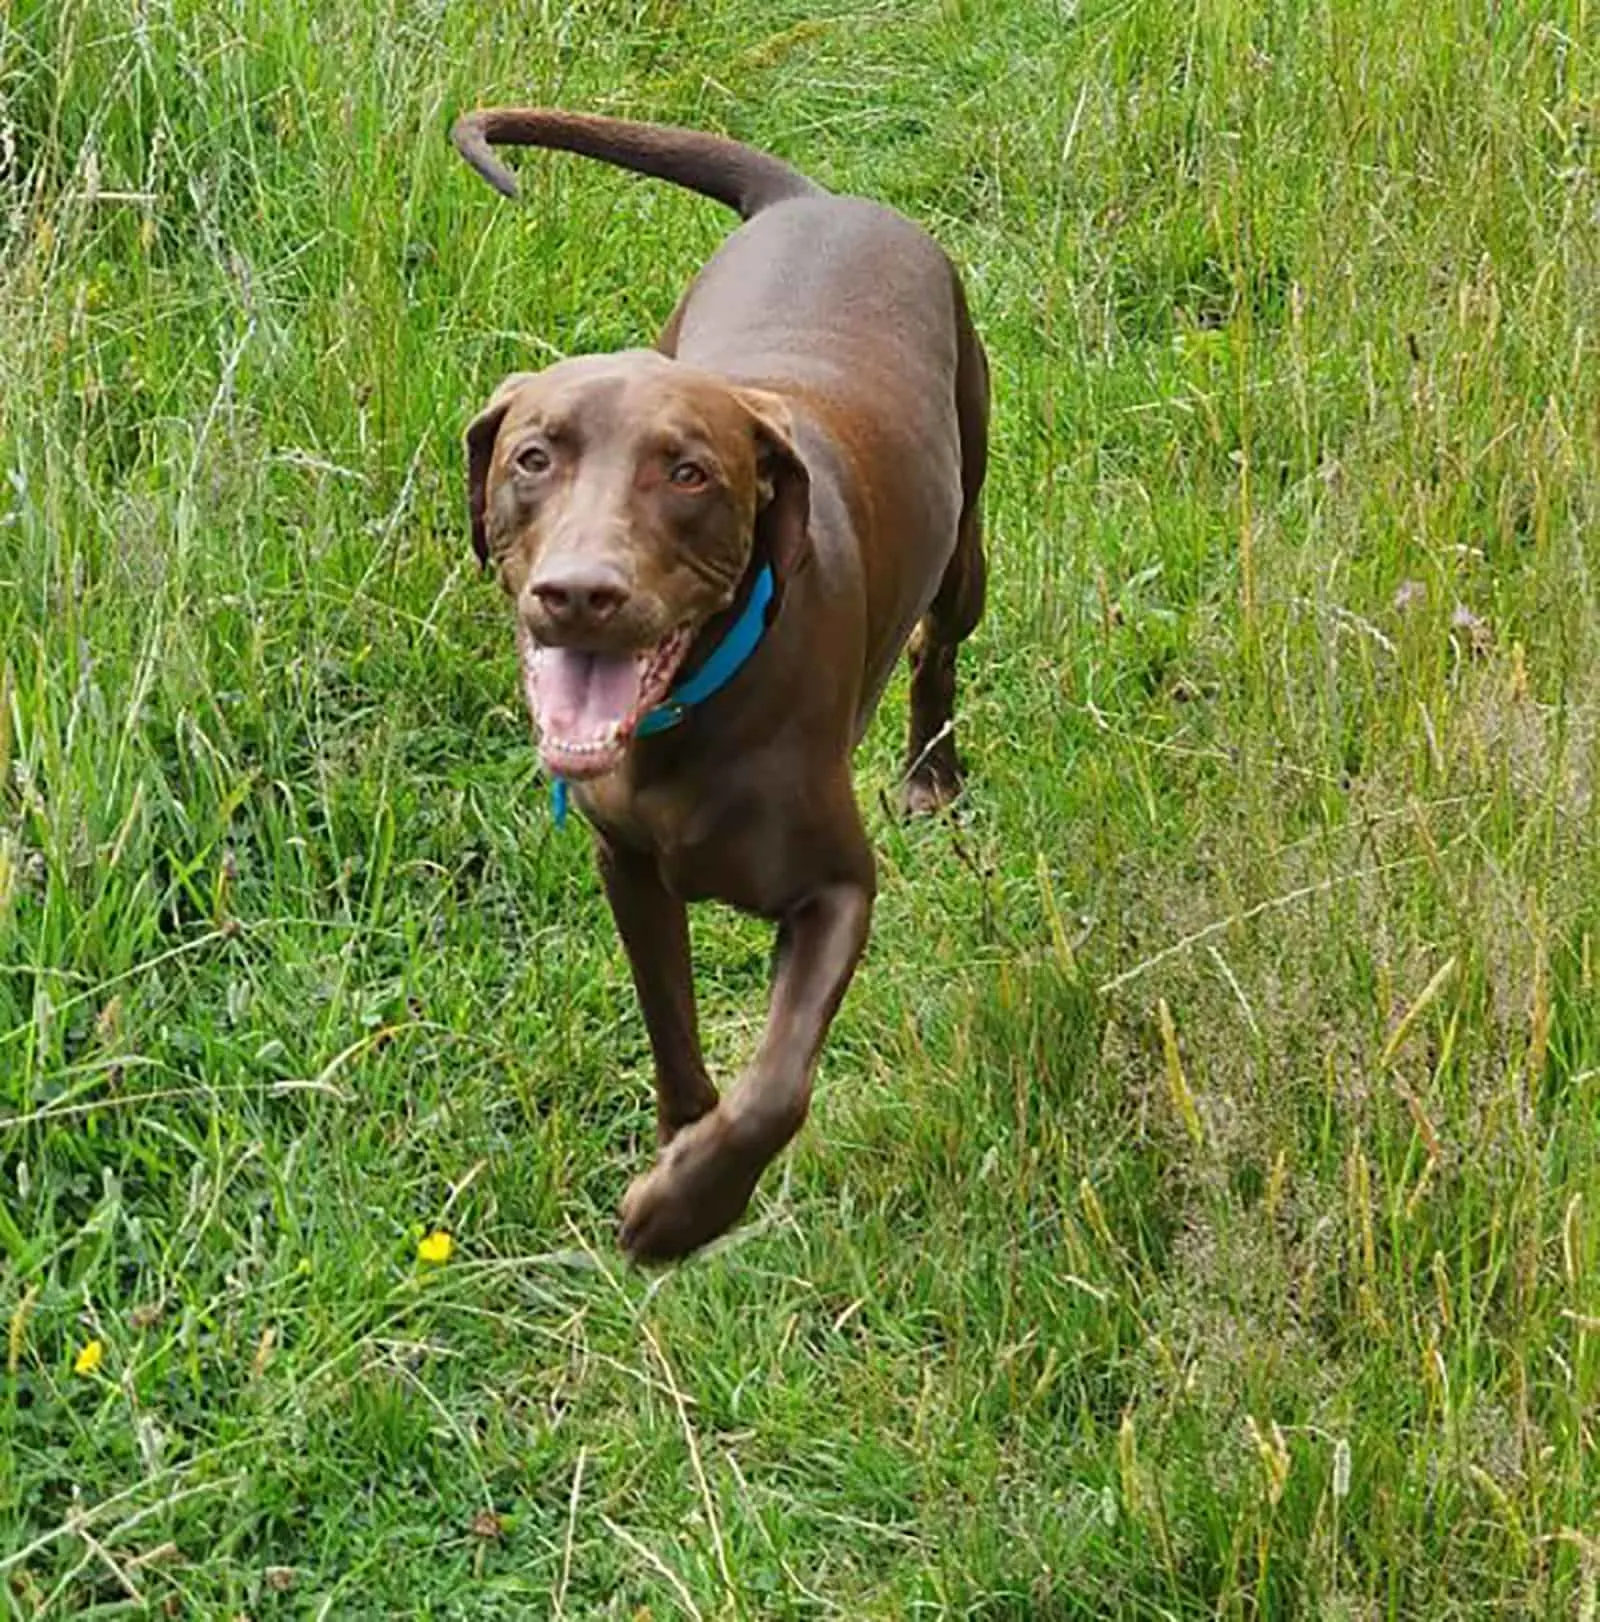 the vizmaraner dog running on the grass field